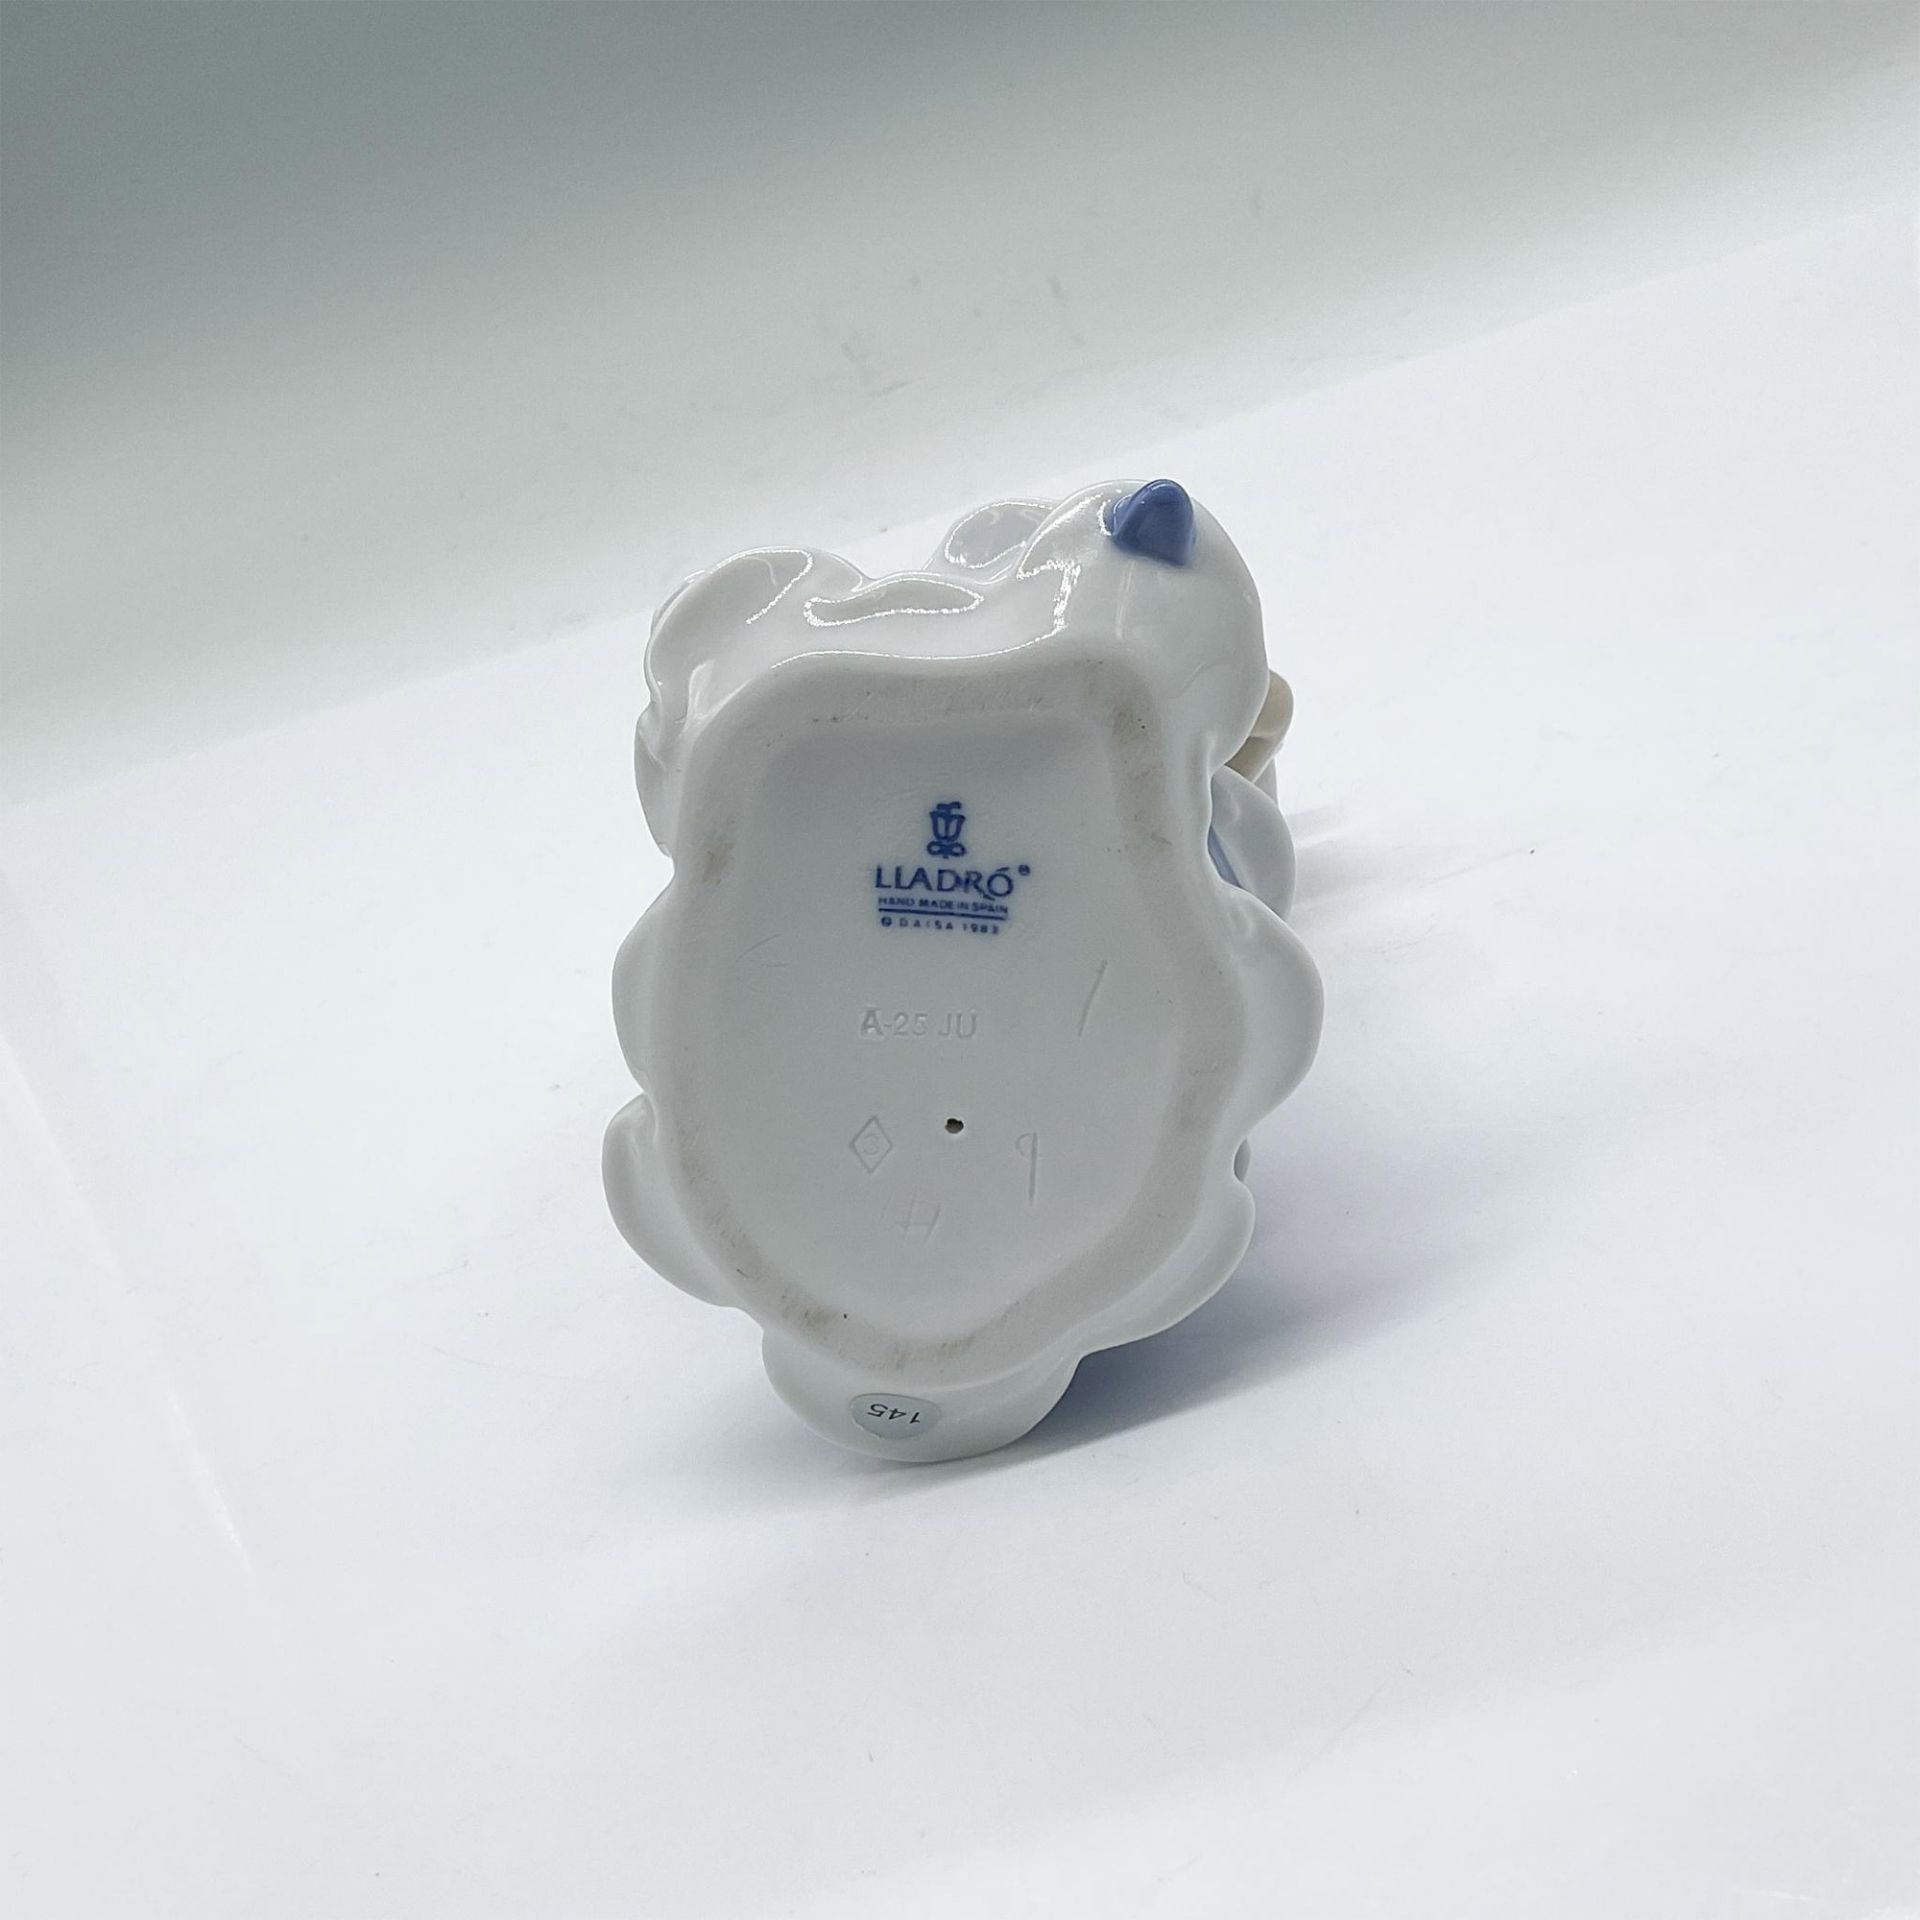 Lladro Porcelain Figurine, Juanita - Image 3 of 3